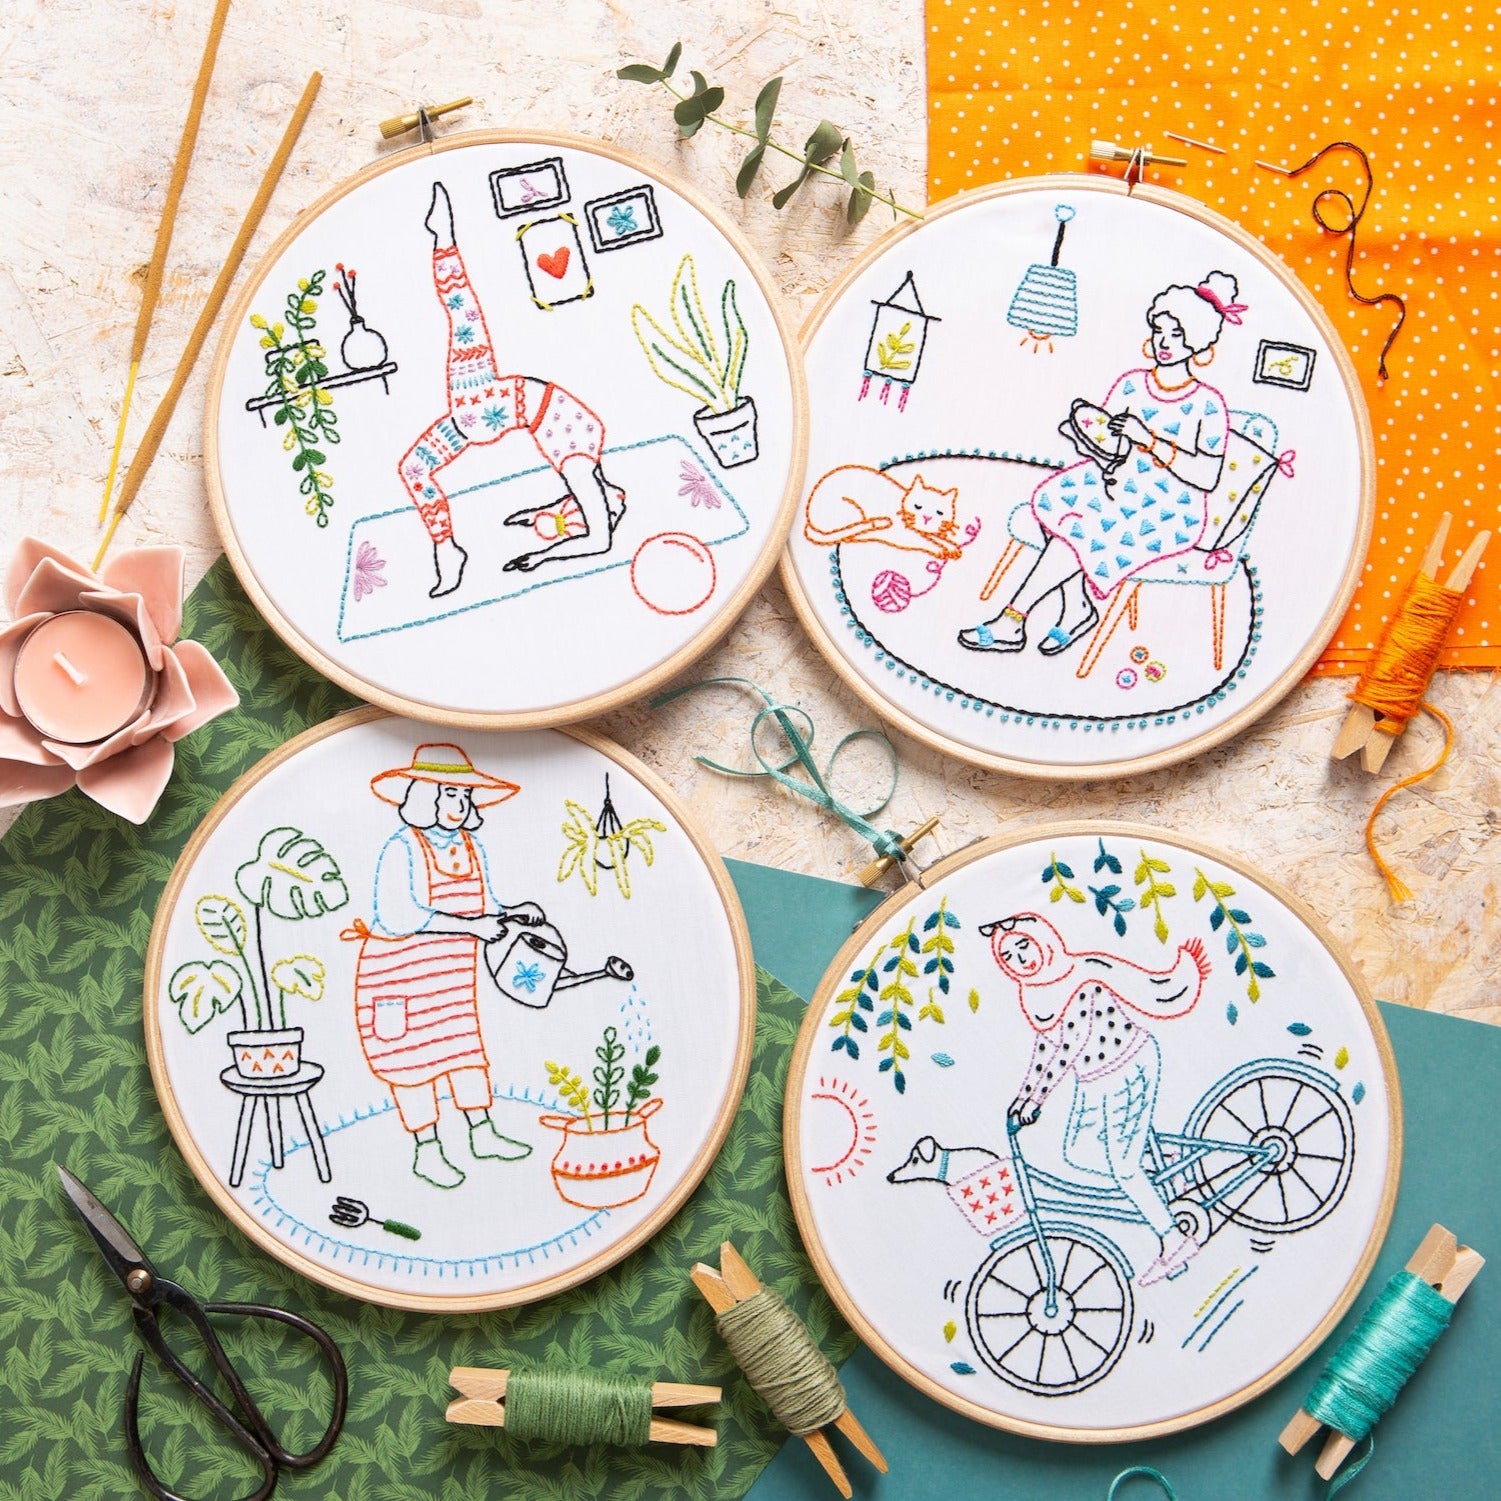 Best hand embroidery needles - La creative mama